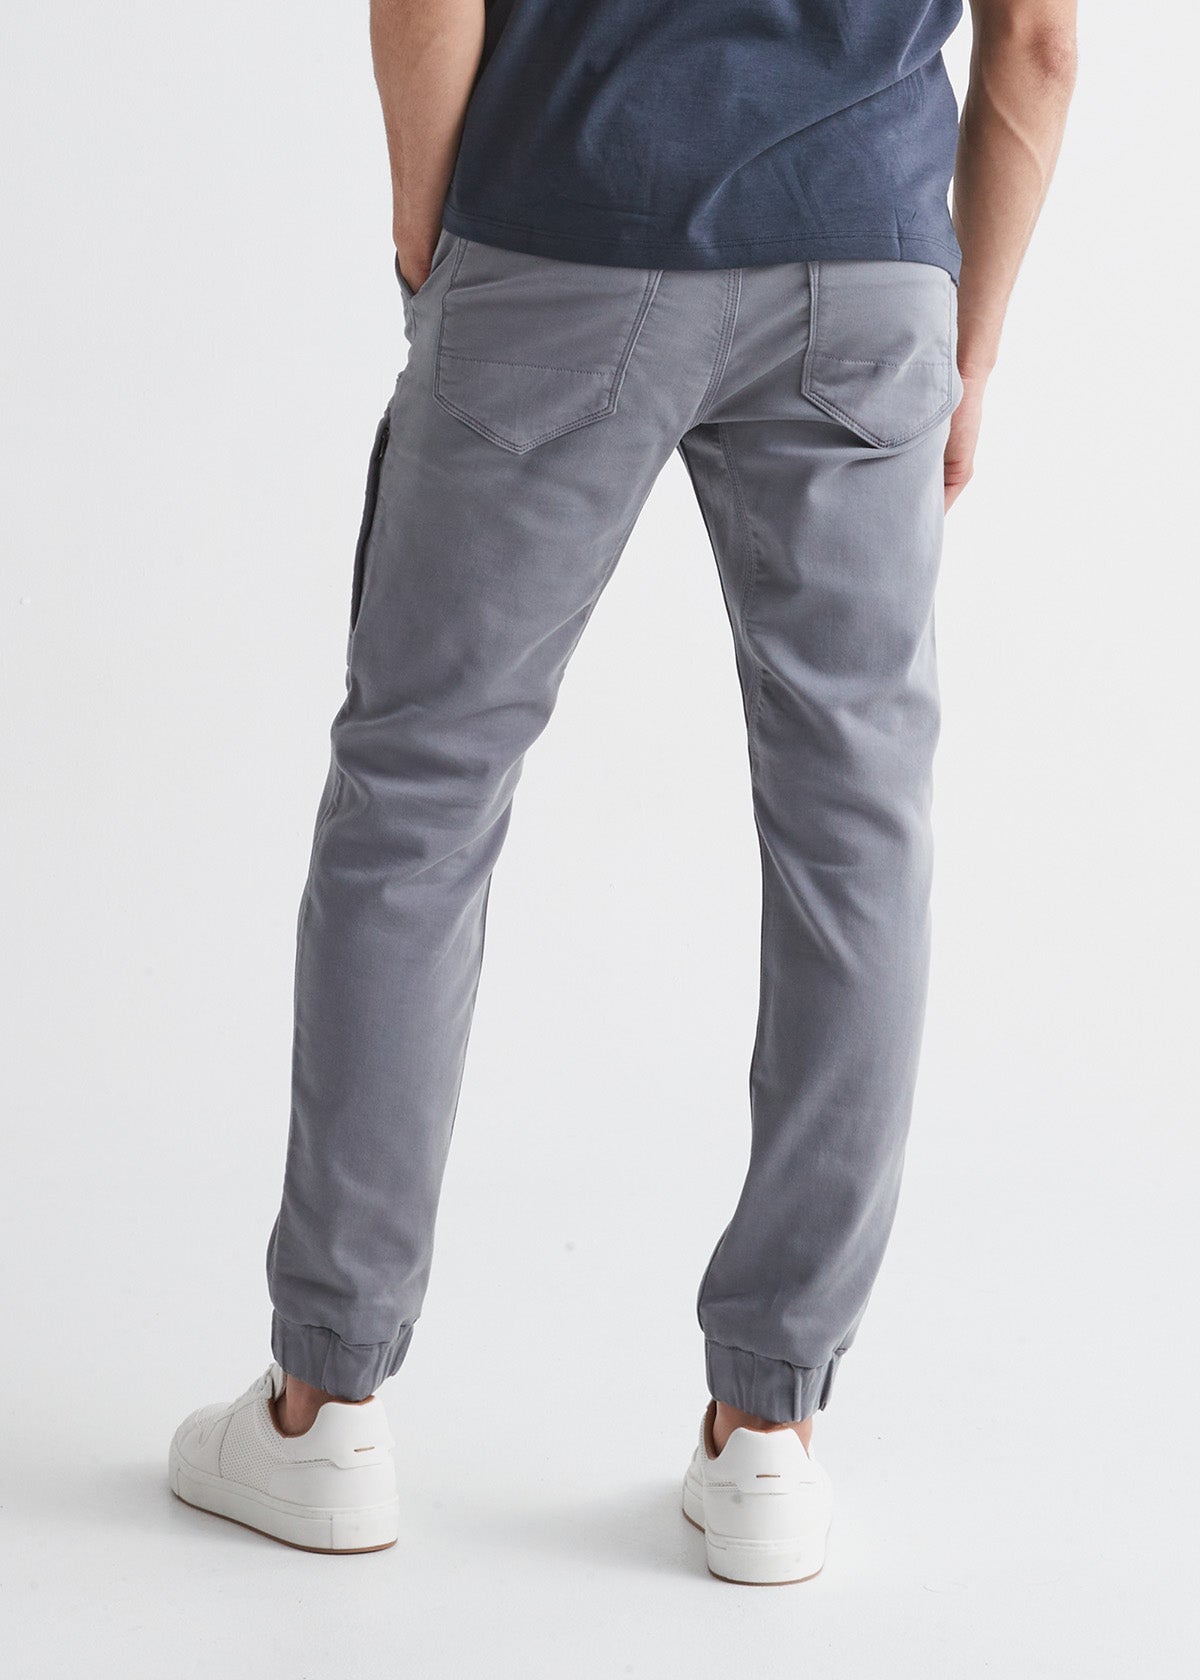 Brilliant Basics Men's Cuffed Jogger Pant - Moon Grey - Size Large